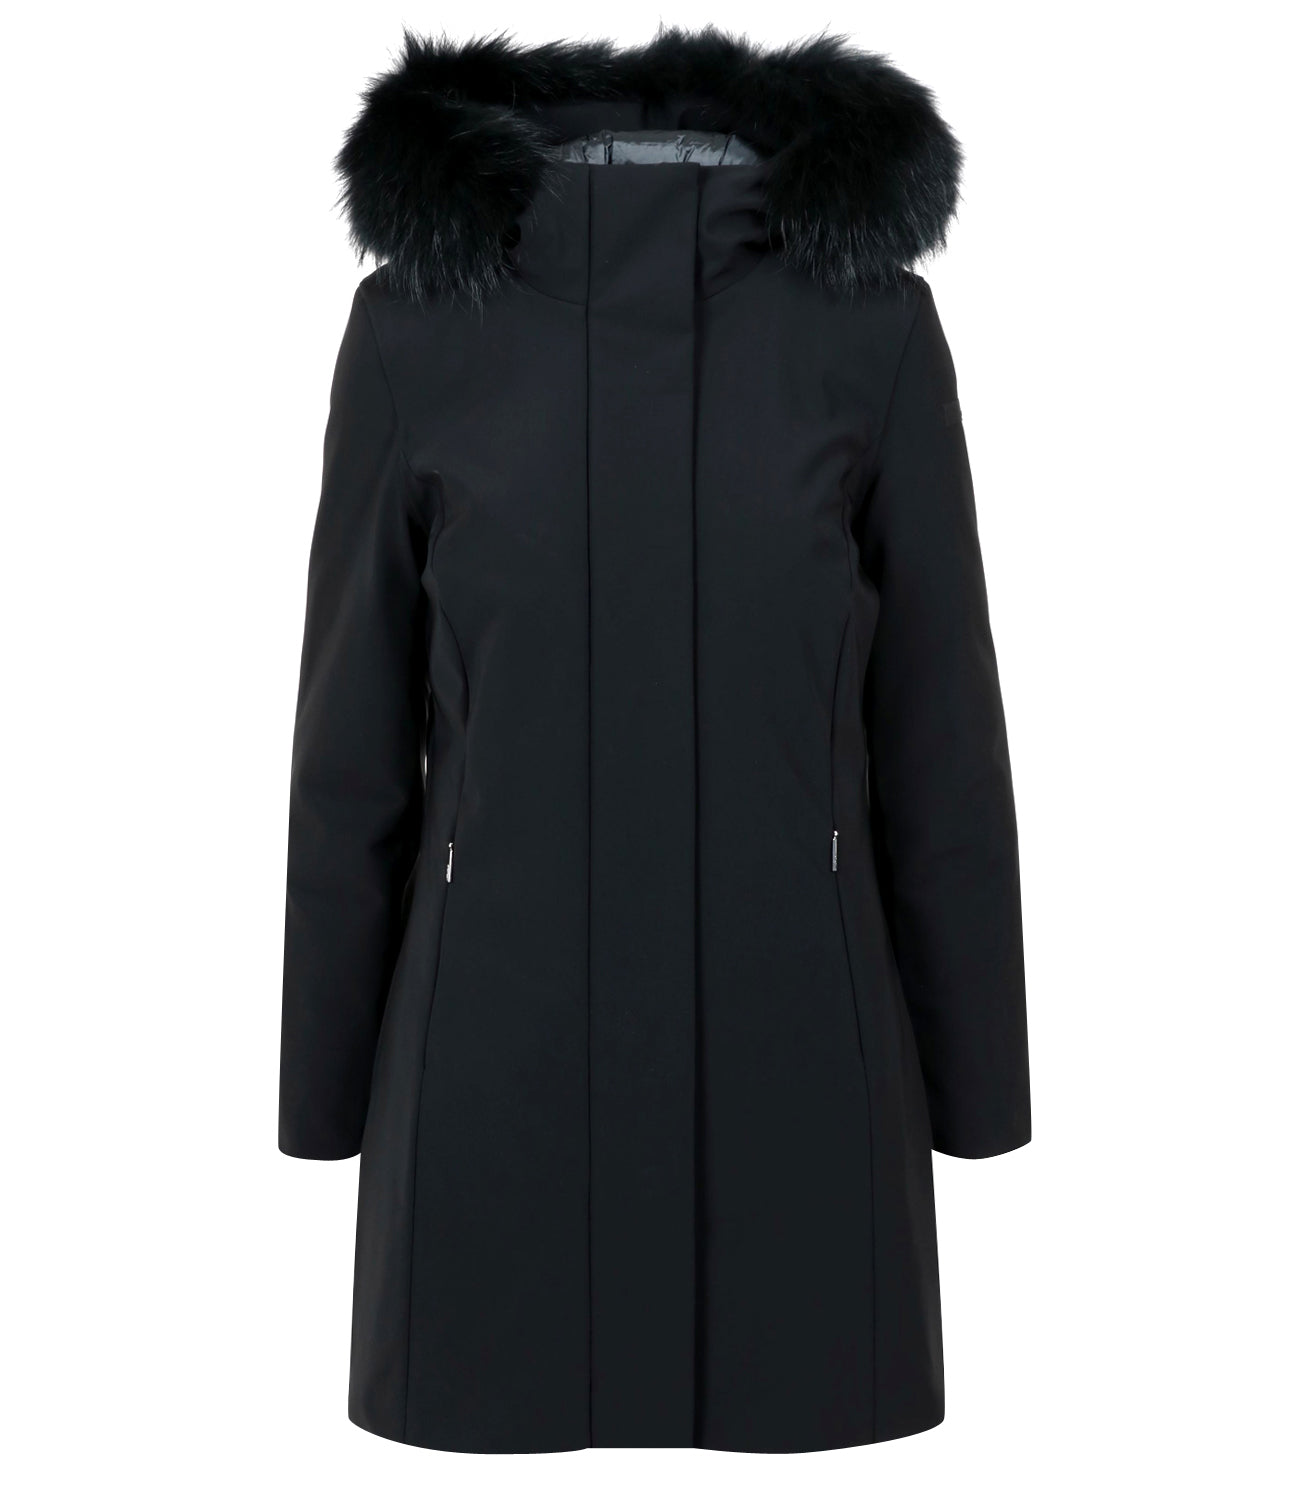 RRD | Winter Long Fur Jacket Black